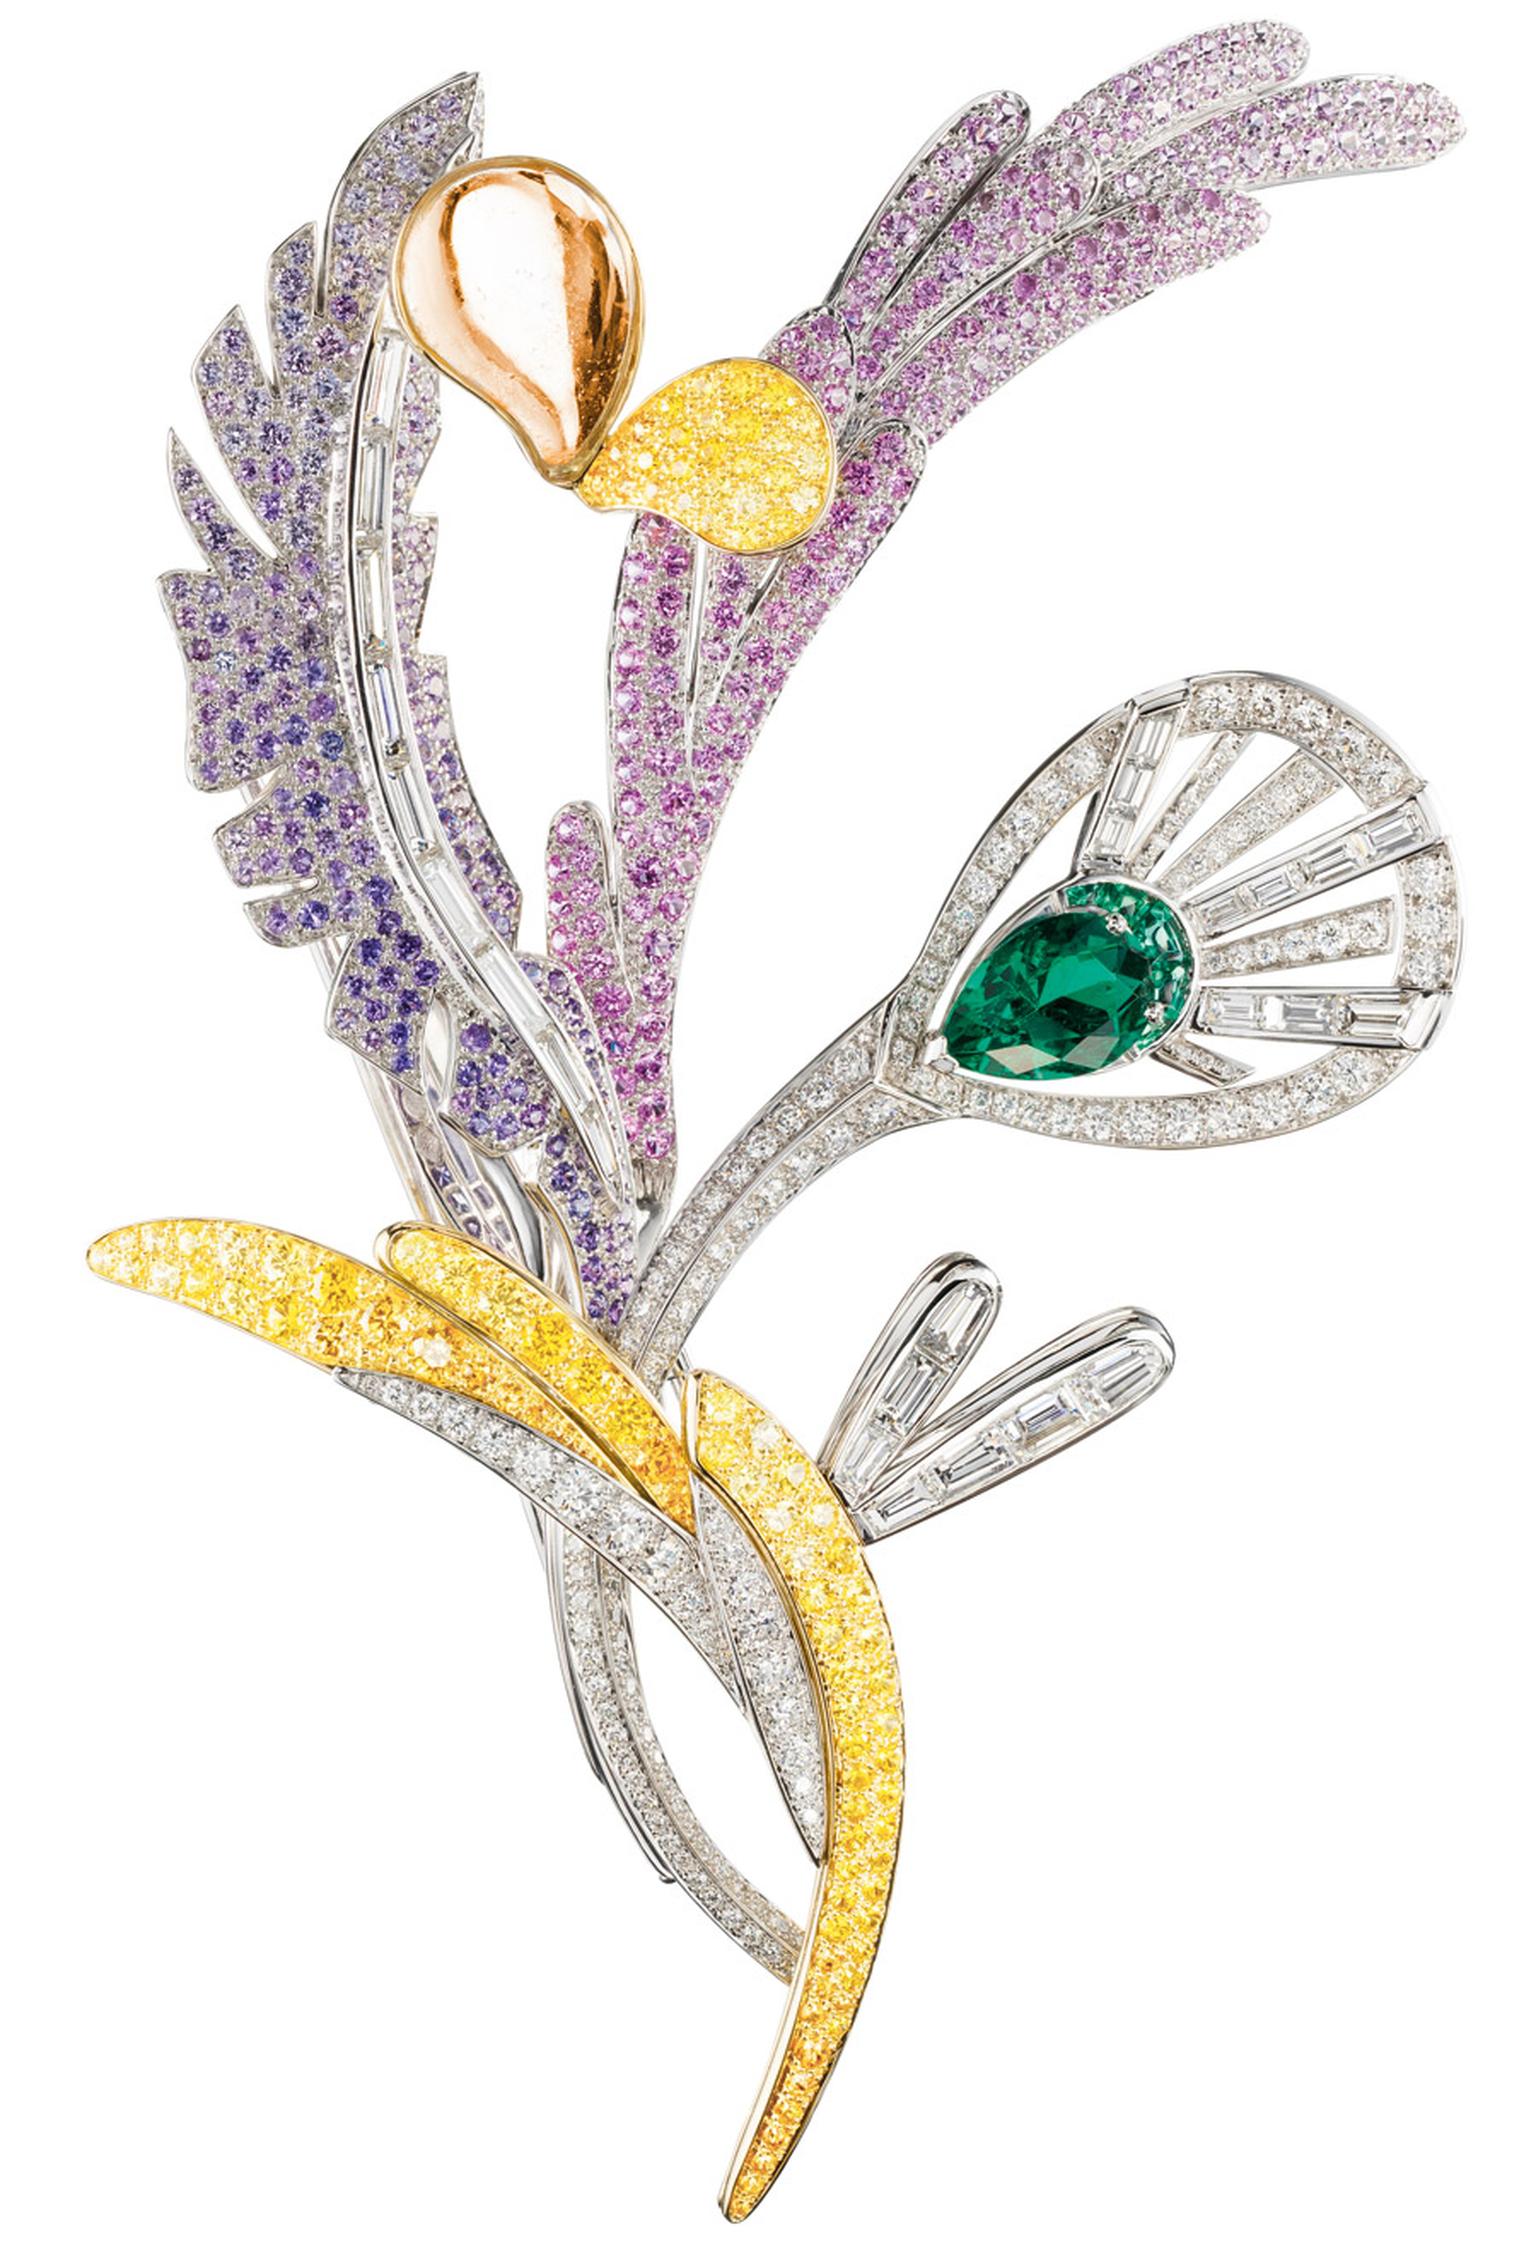 Boucheron's Bouquet d’Ailes brooch from the 2012 Biennale des Antiquaires, set with emeralds, coloured sapphires, fine stones and diamonds